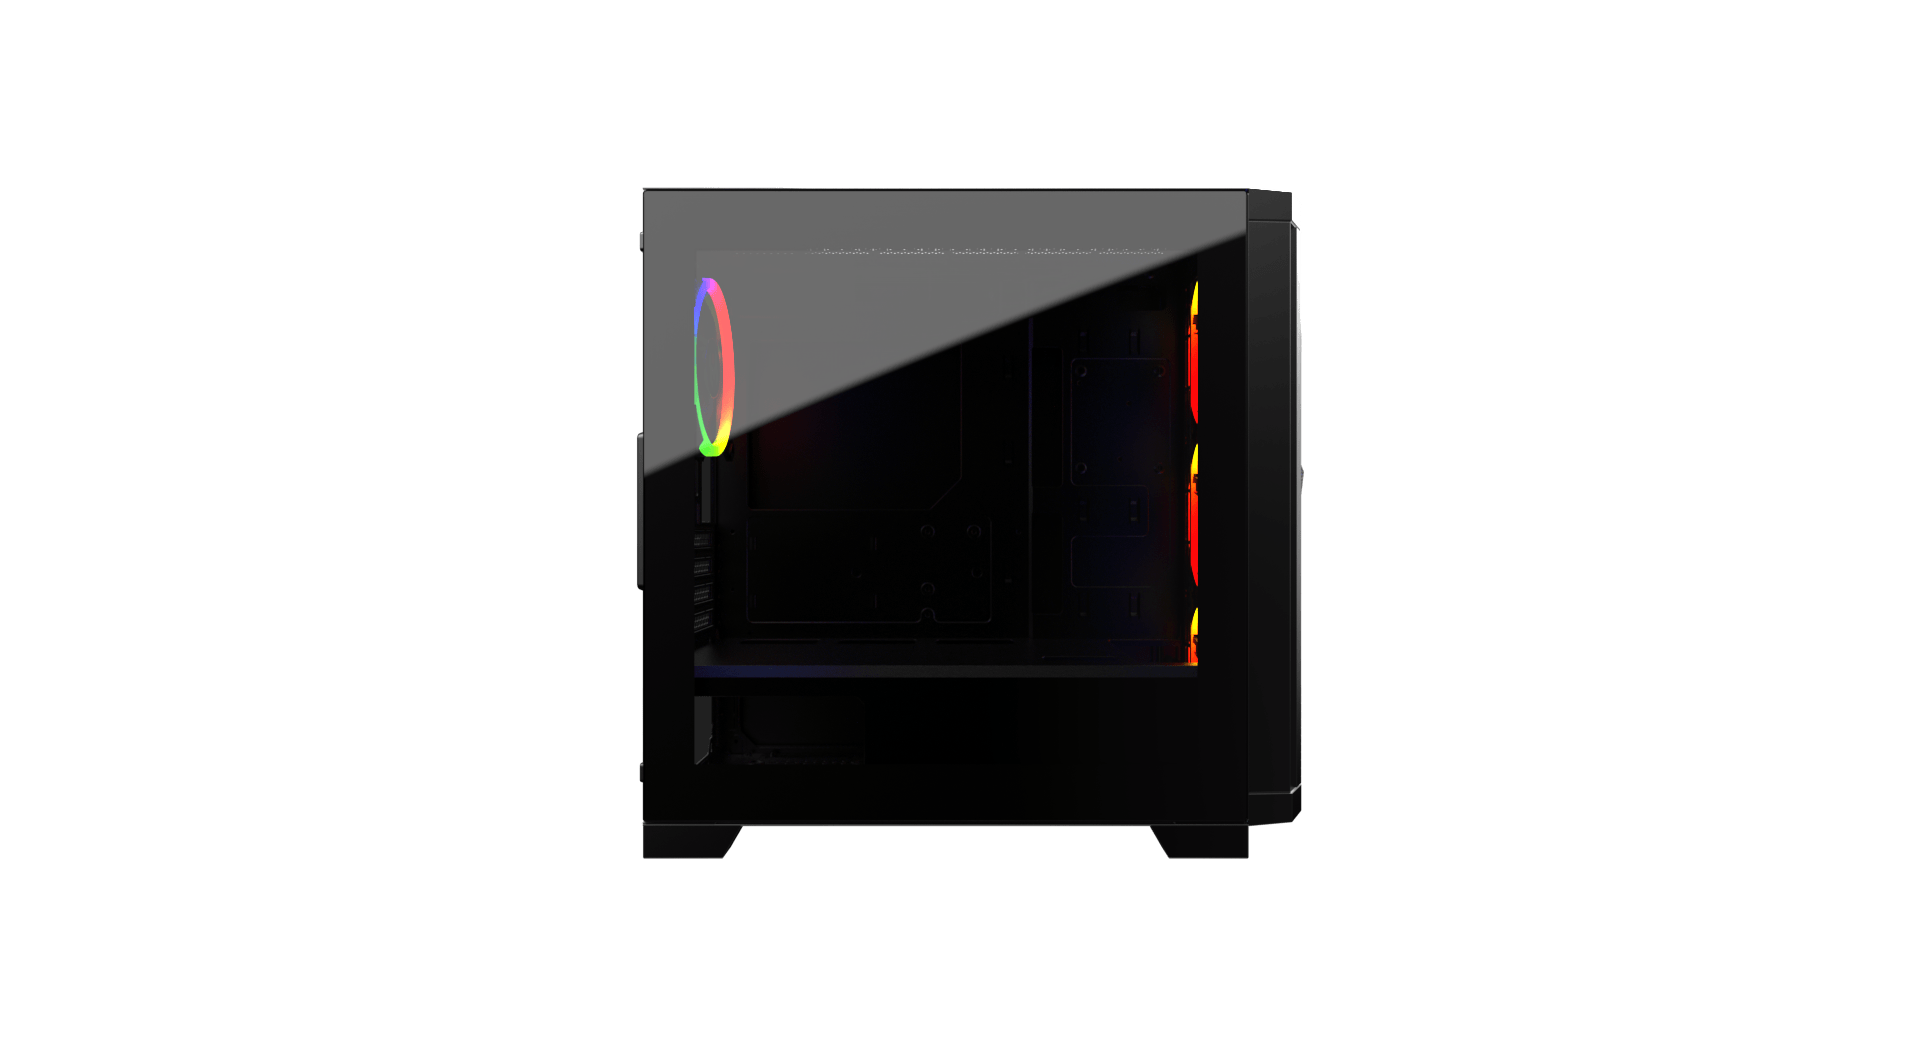 MRED StarDust Mini RGB Noir Boitier PC Gamer Mini-tour Micro-ATX (MR-025)  avec Quadrimedia